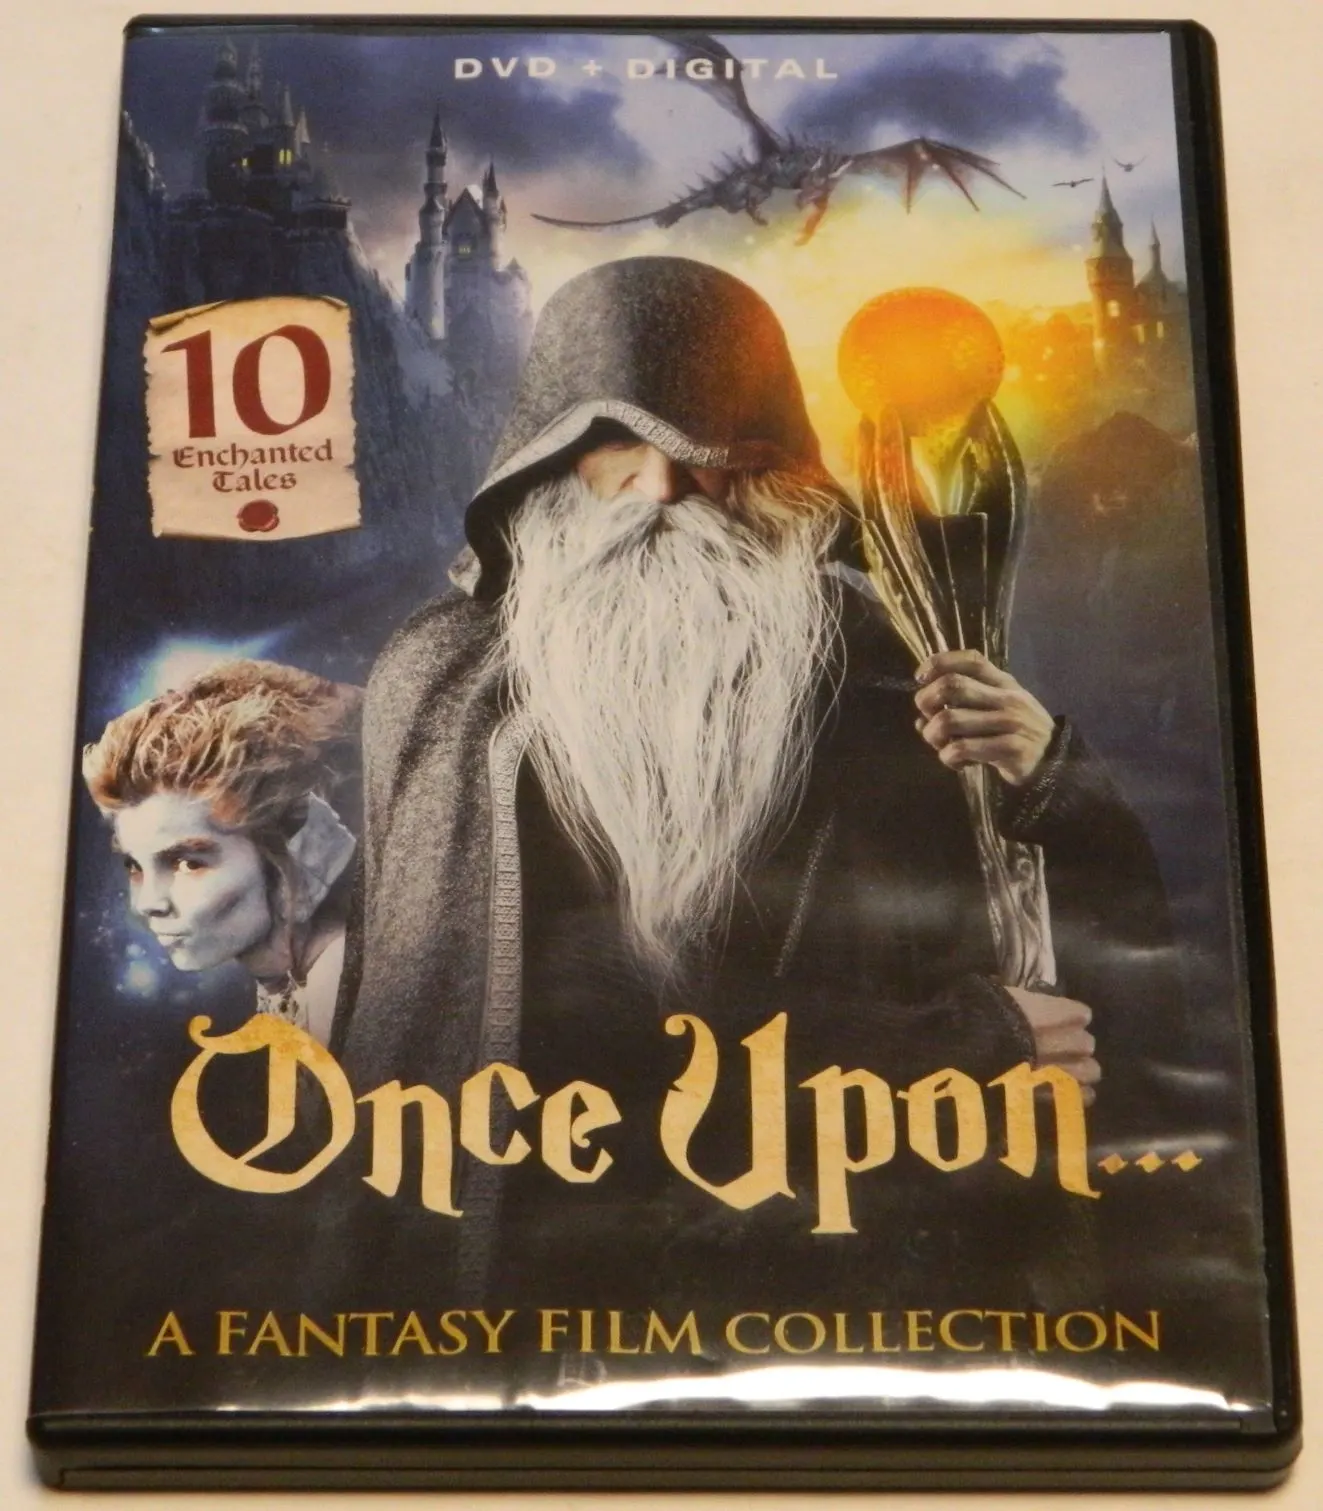 kom tot rust Doe een poging Geschikt Once Upon... A Fantasy Film Collection - 10 Enchanted Films DVD Review -  Geeky Hobbies